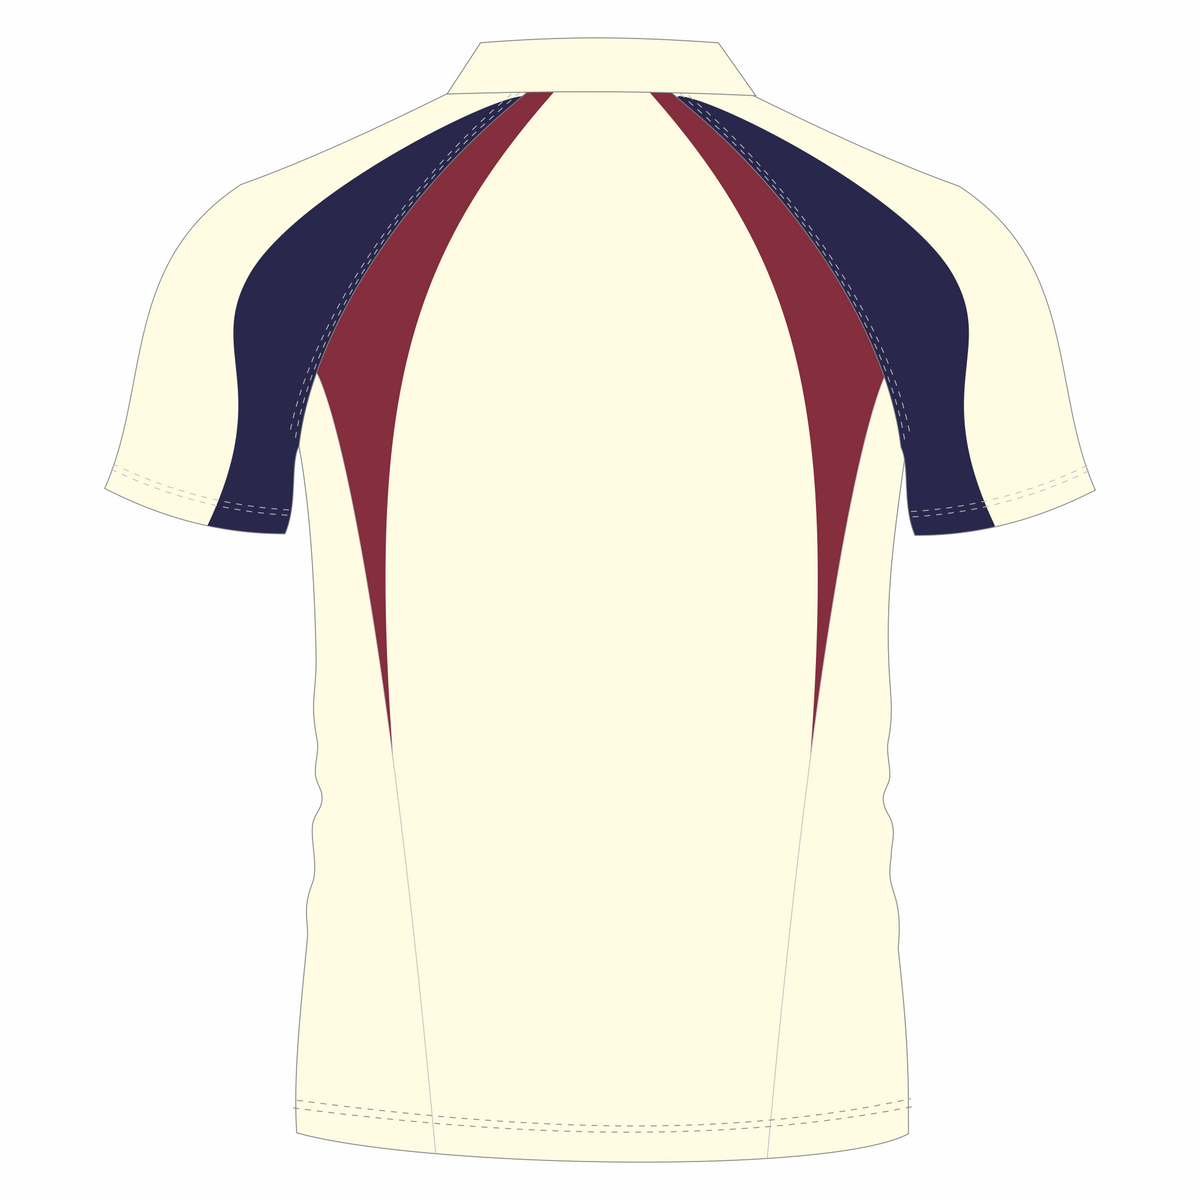 Royal Grammar School Cricket Shirt